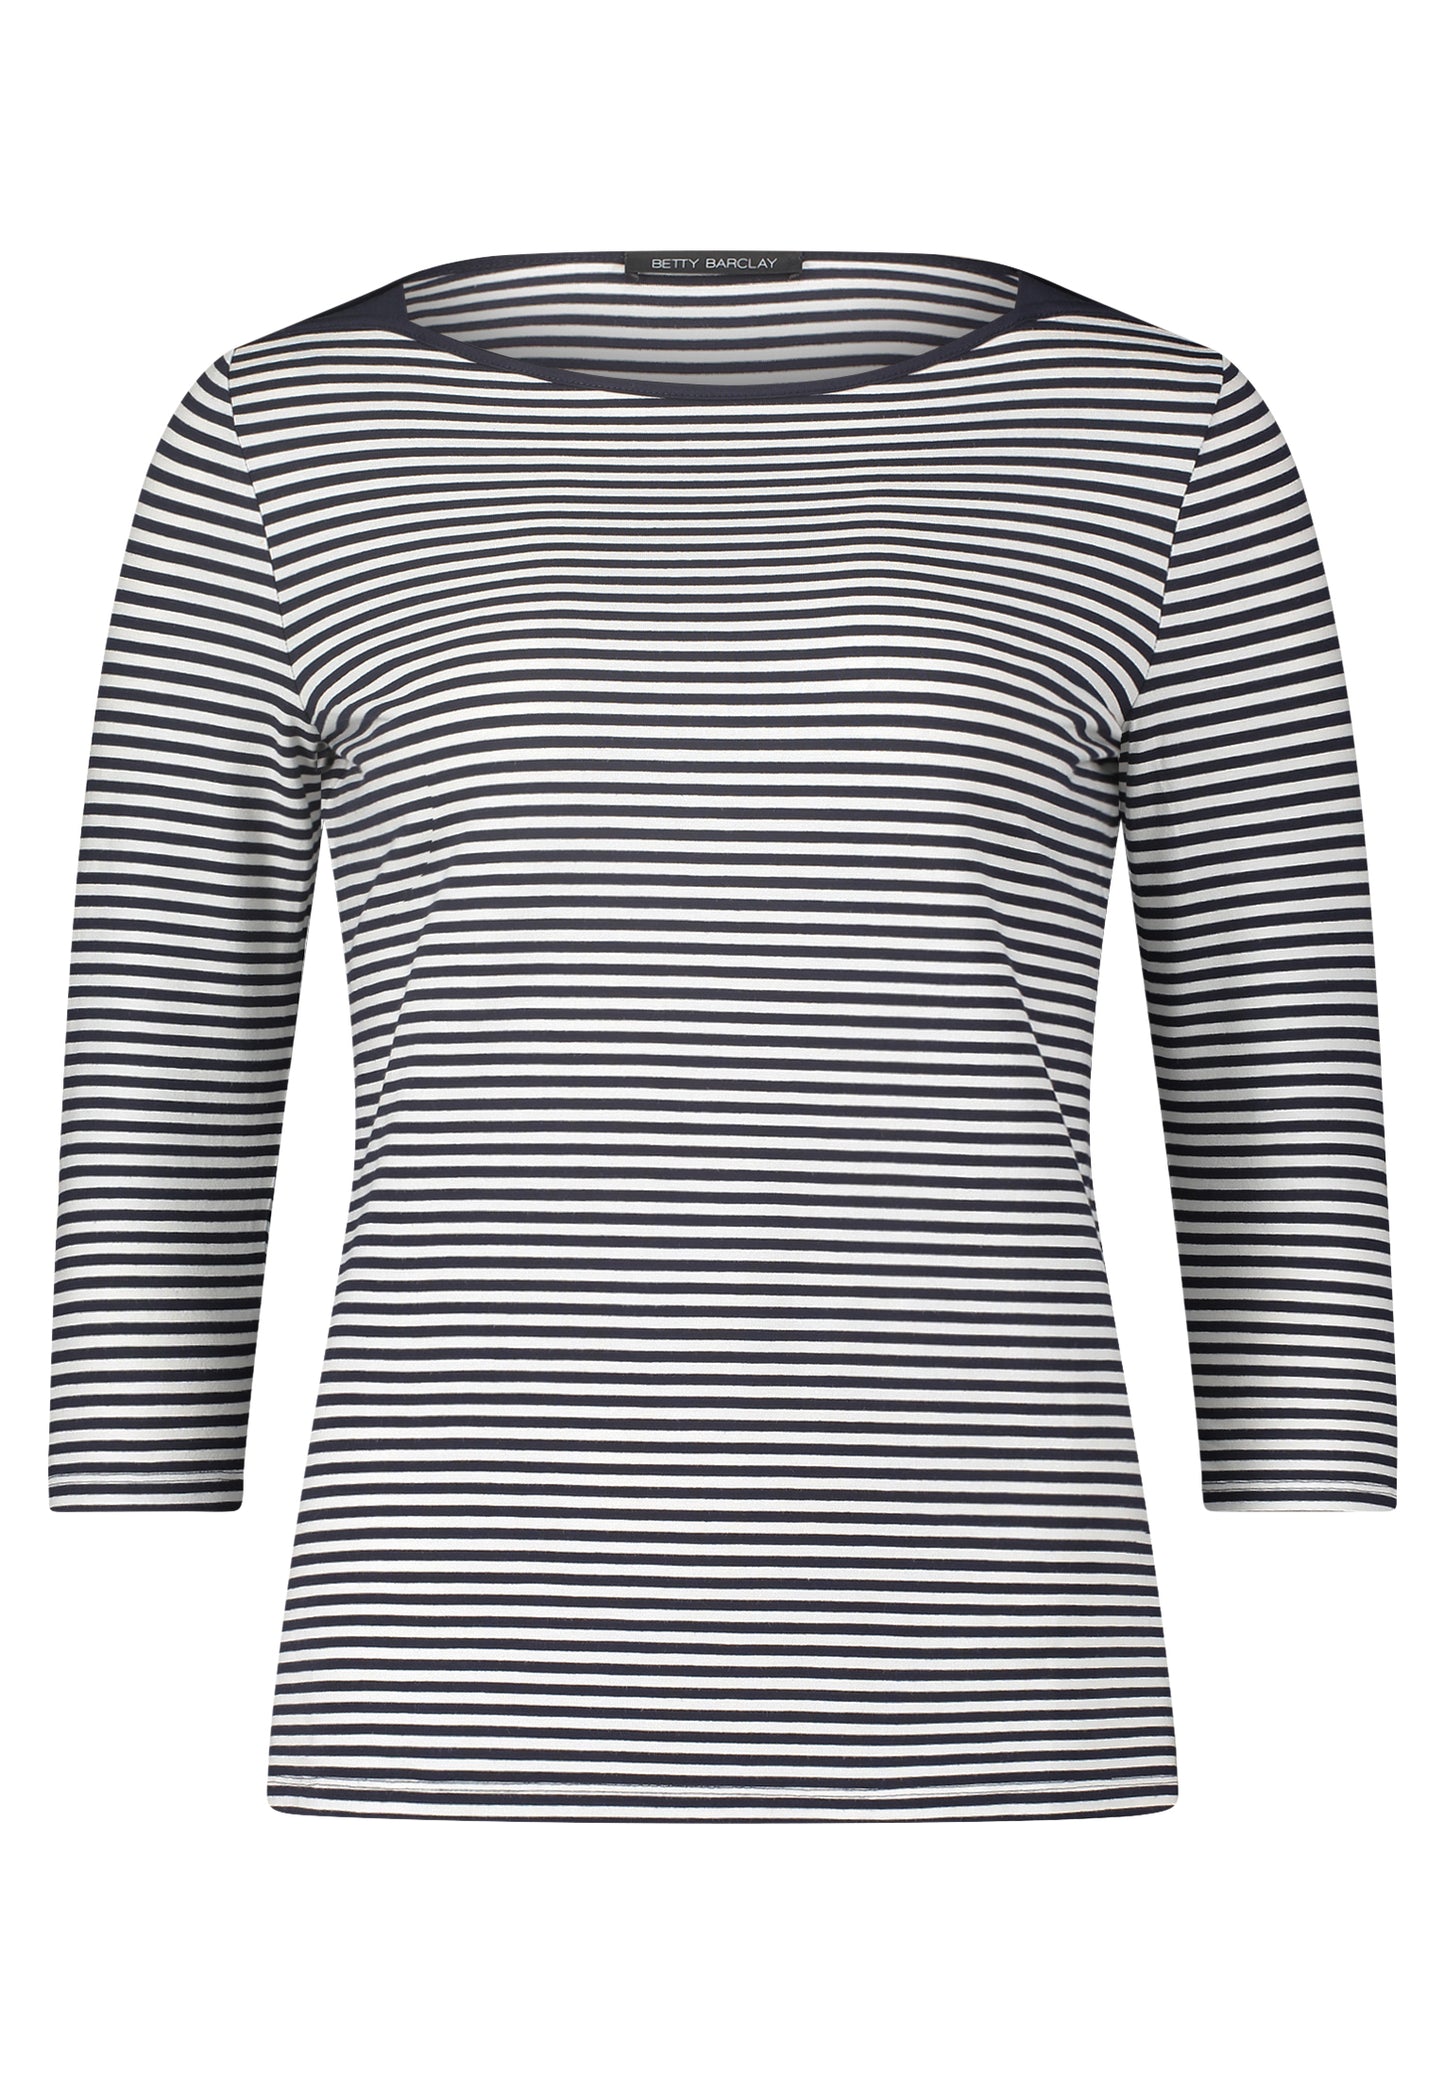 Betty Barclay Navy Striped T-Shirt 2064/2569